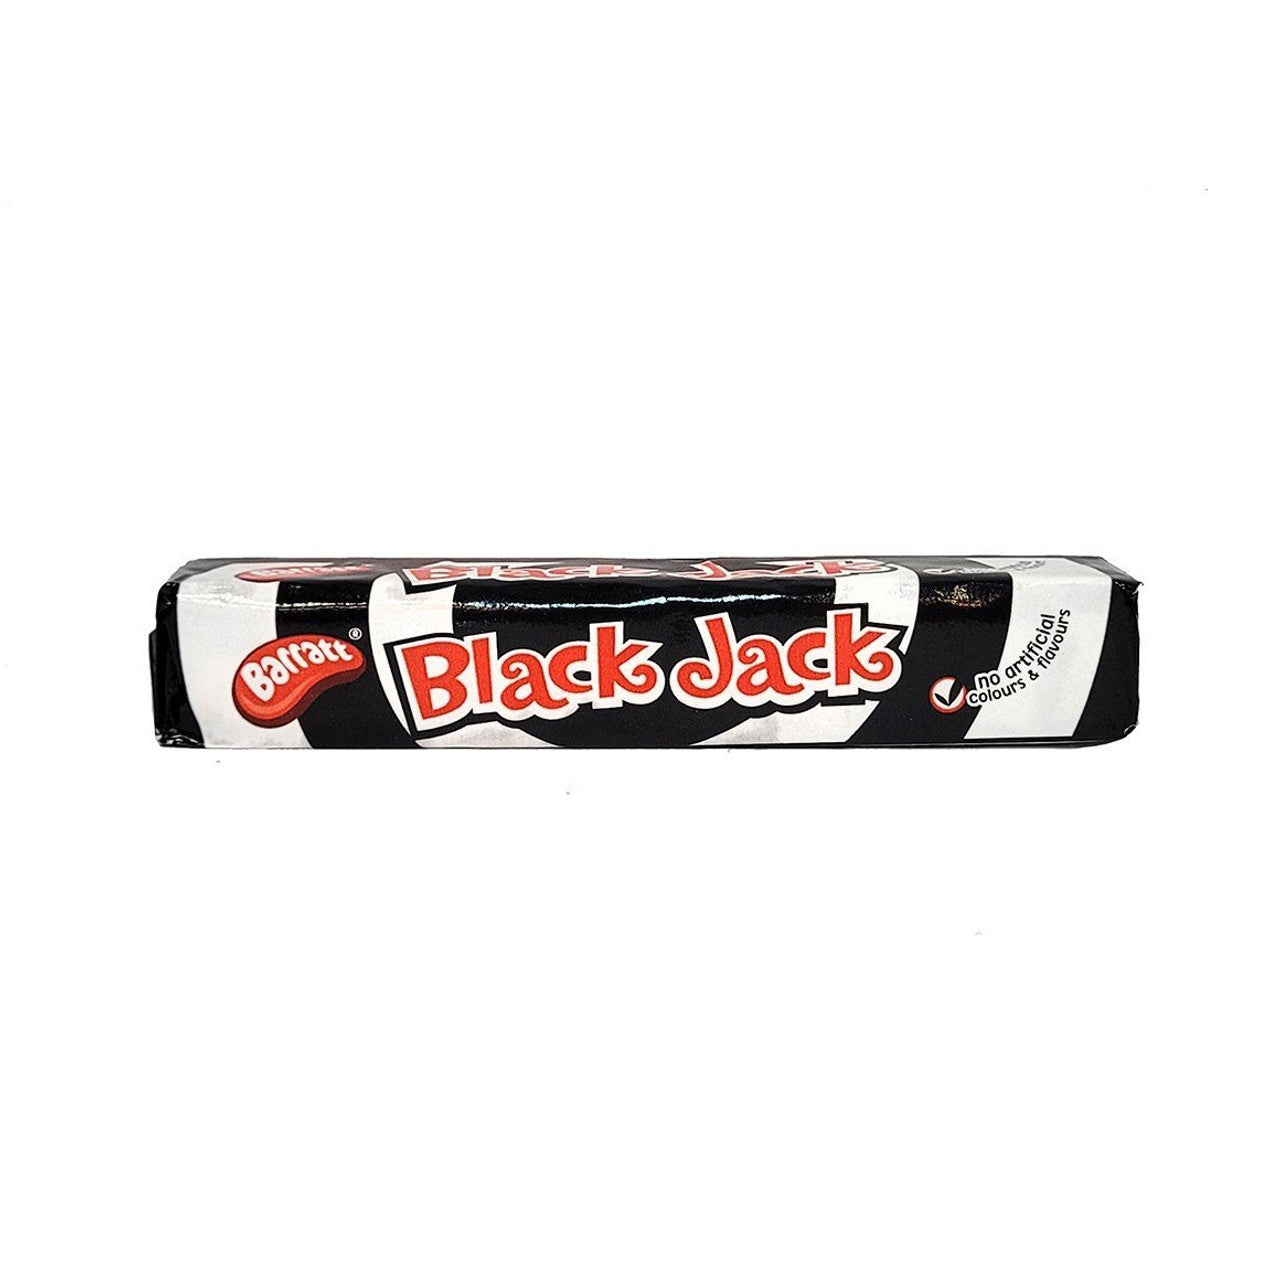 Barratt: Black Jack 36g (1.2oz)